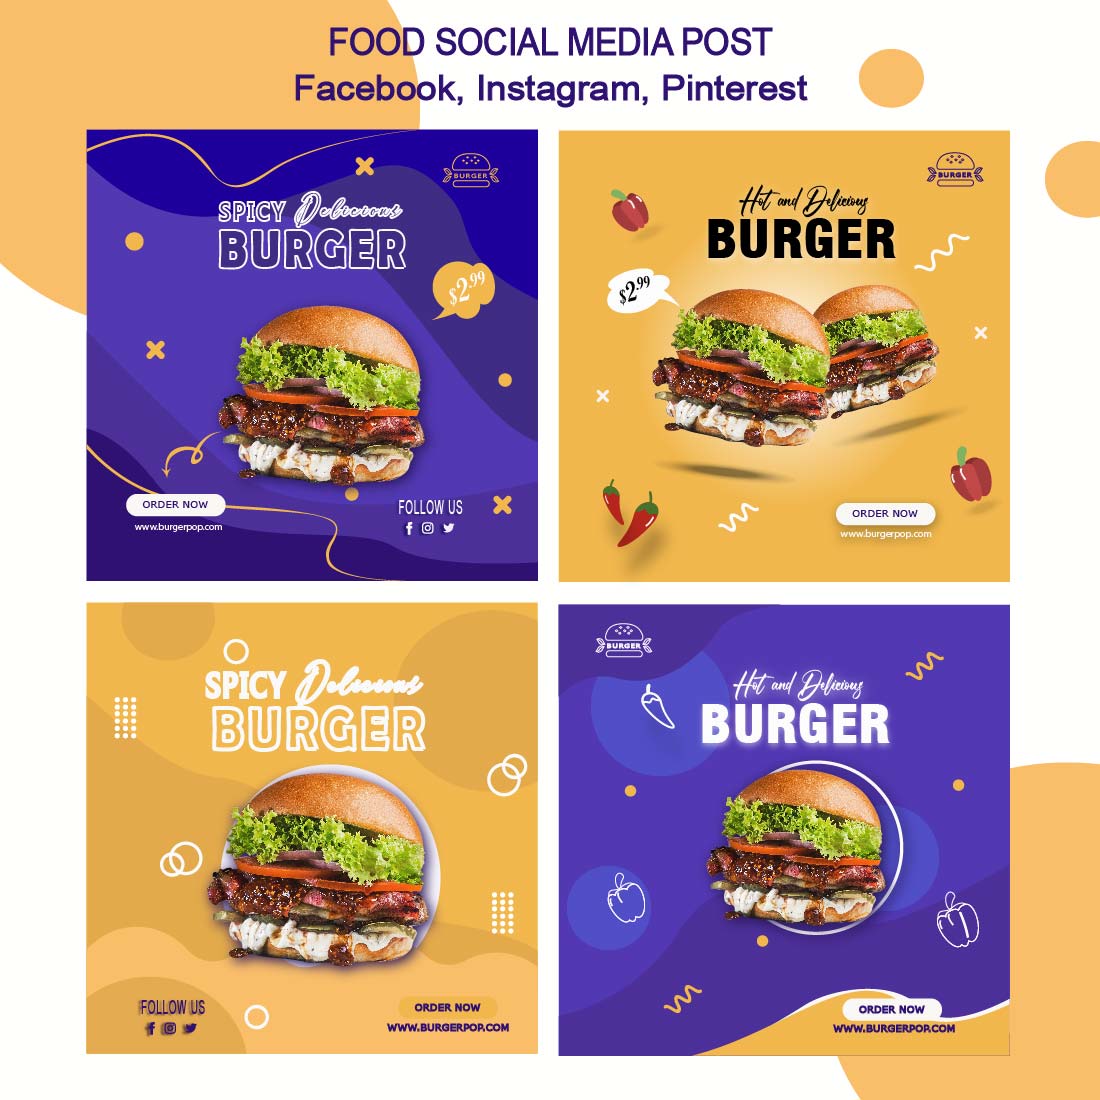 Food Social Media Post cover image.